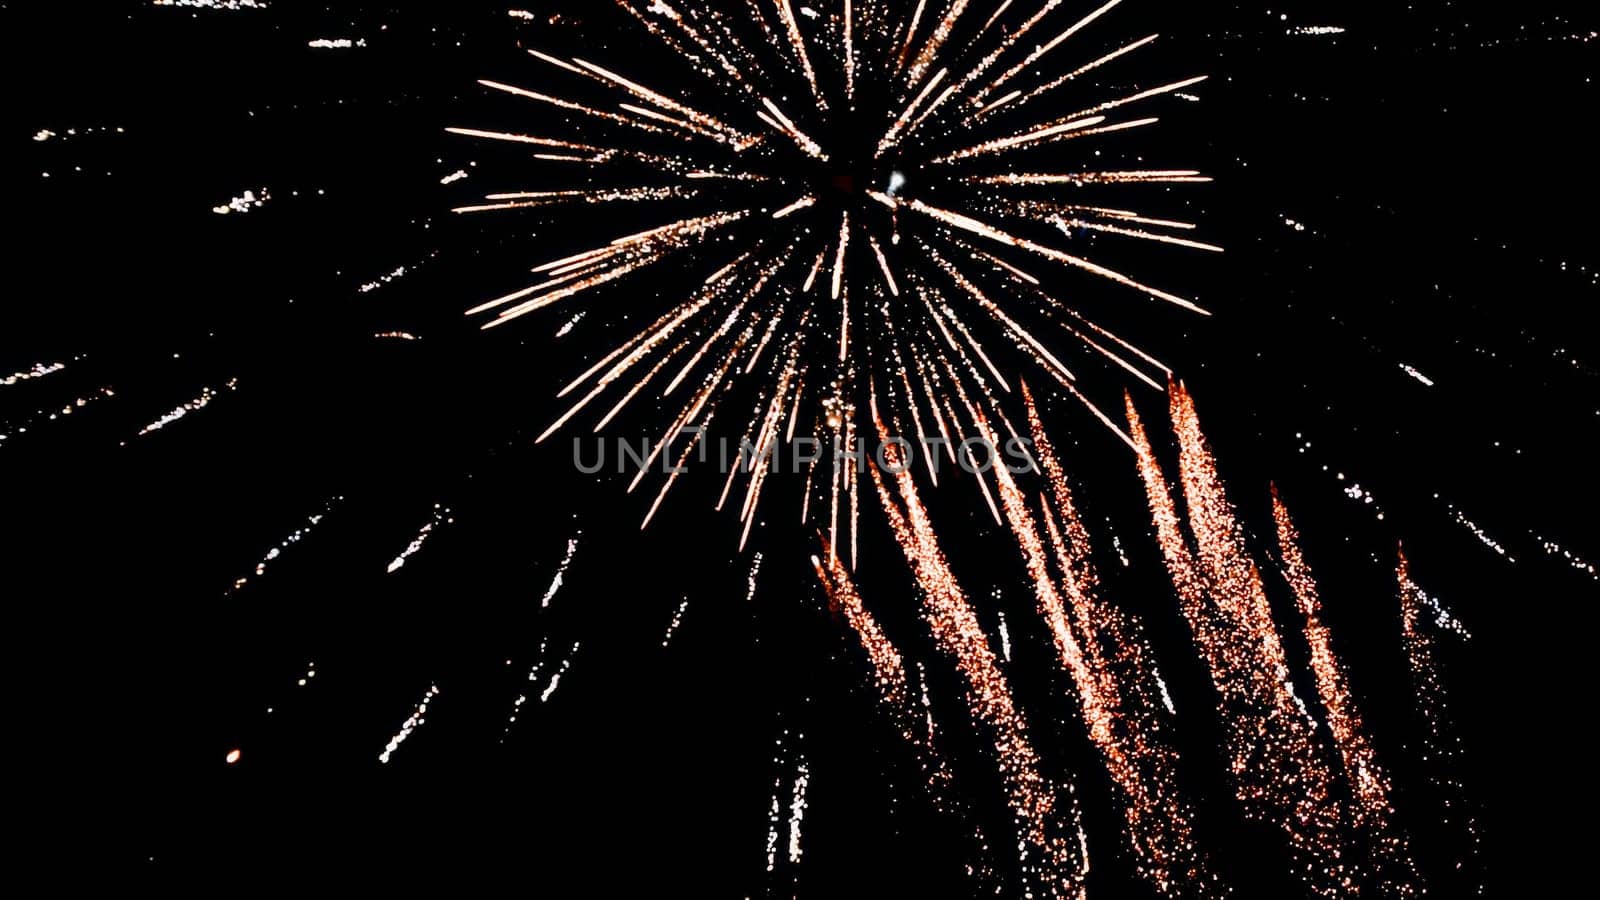 Dazzling firework explodes with vibrant streaks in the dark night sky